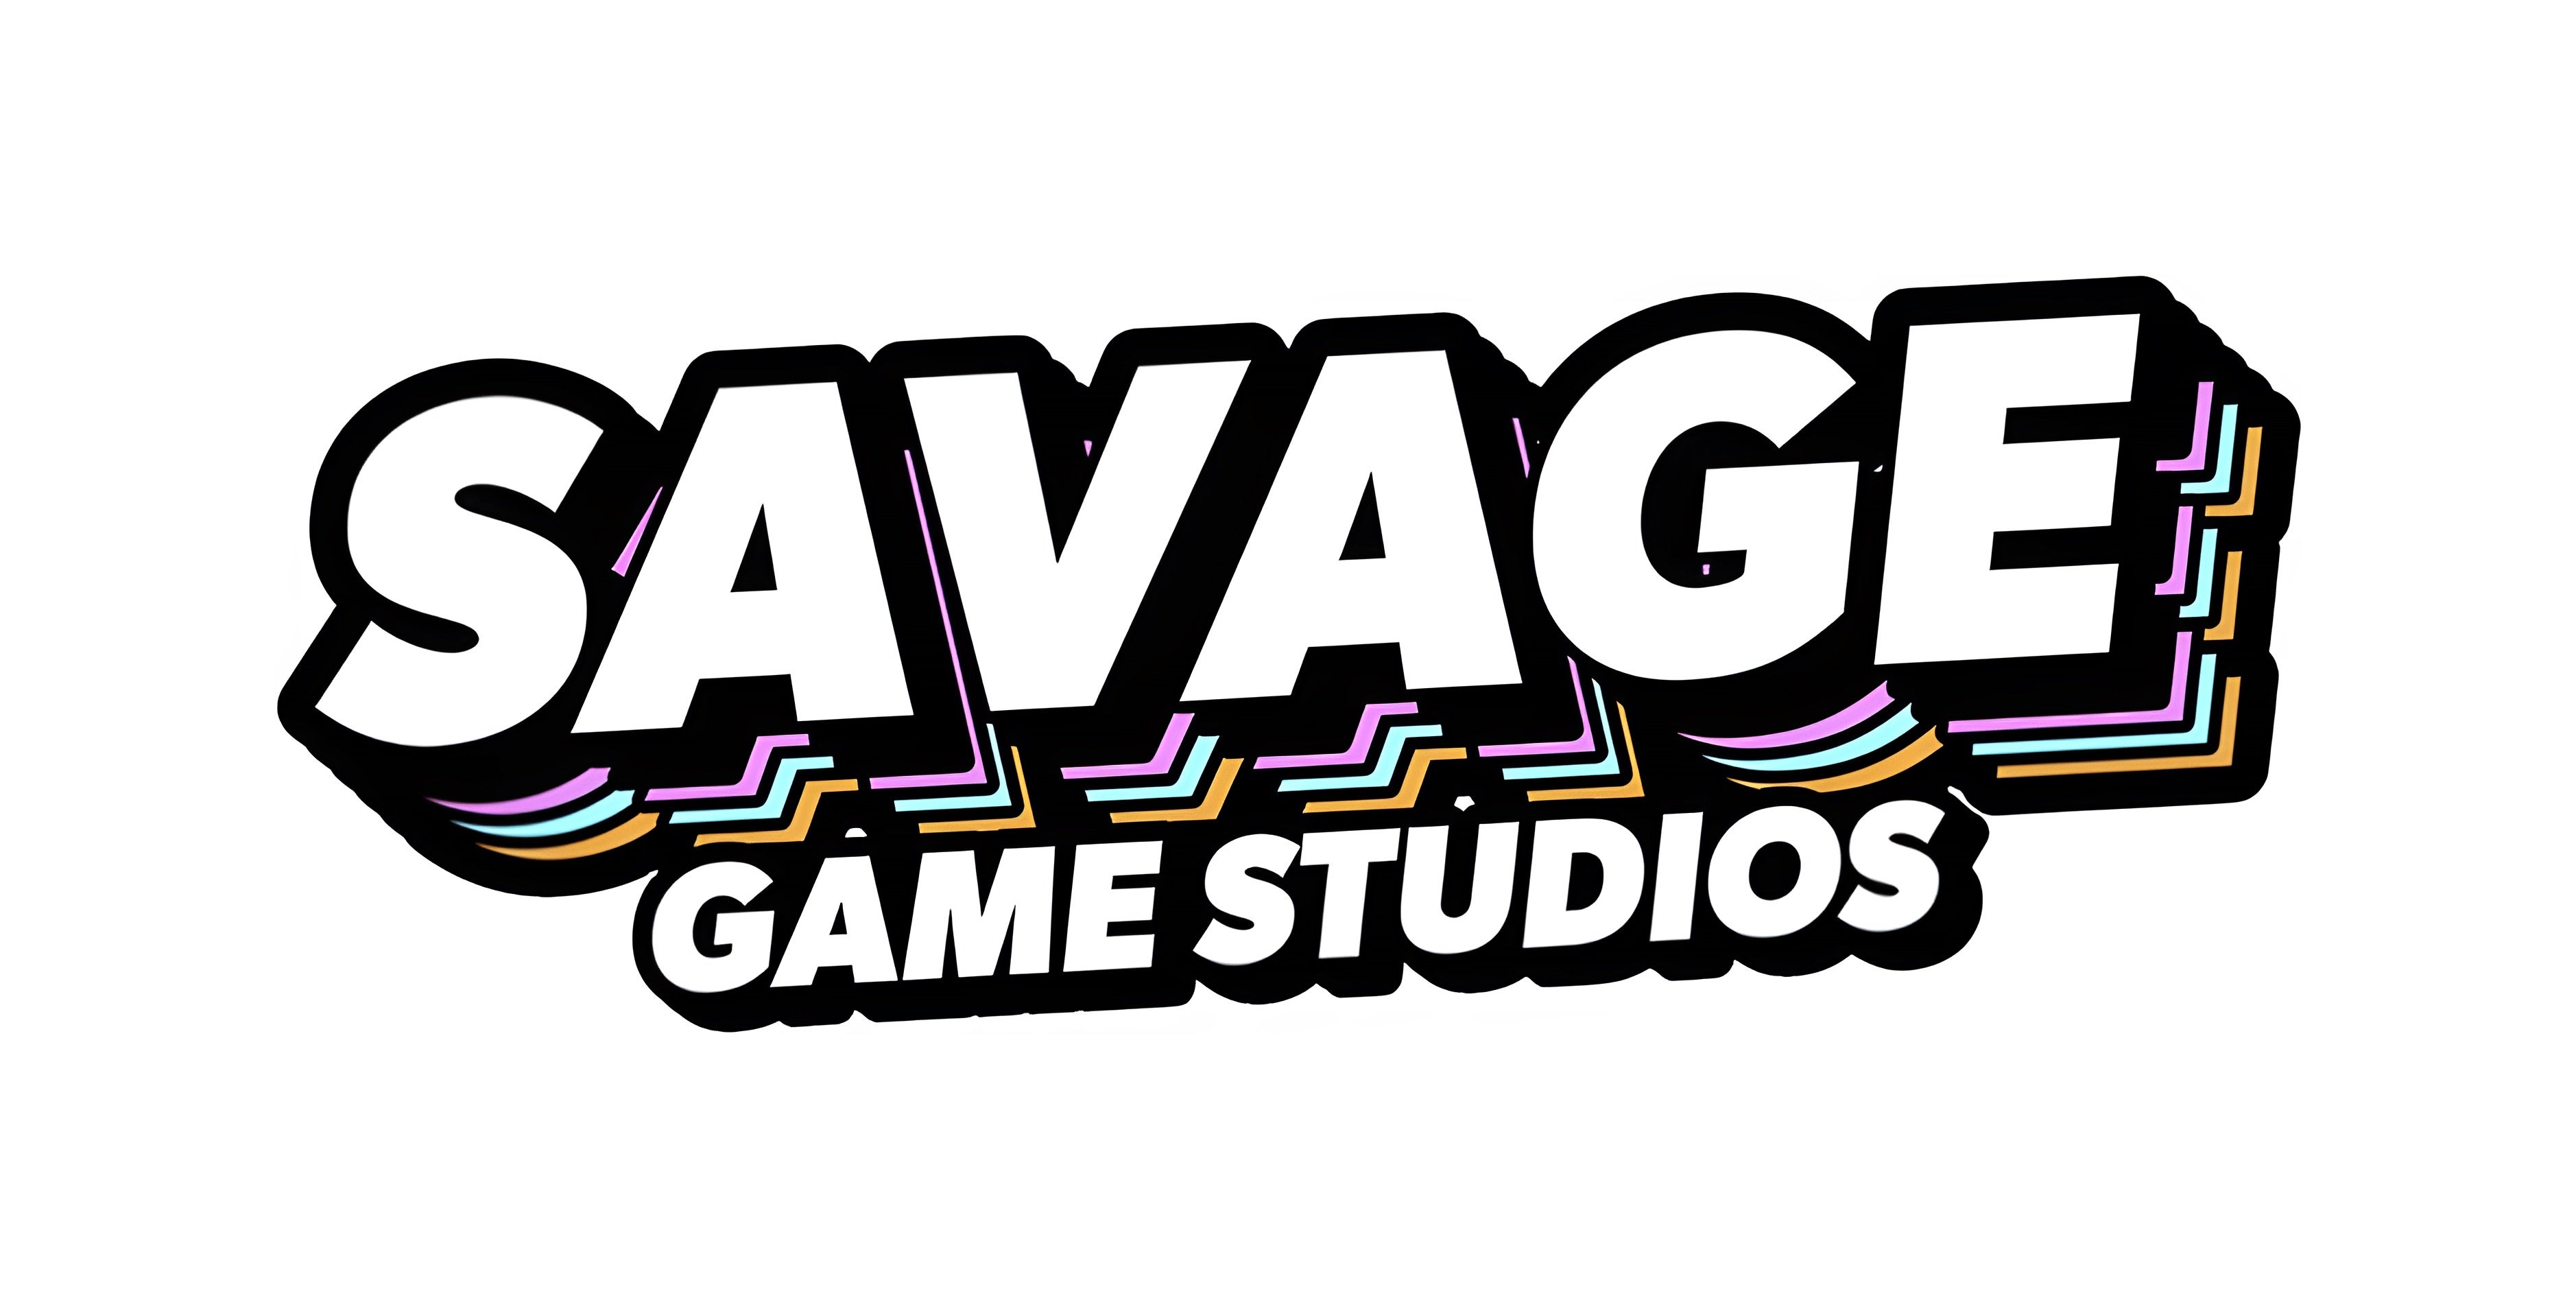 Savage Game Studios is working on mobile games featuring PlayStation's IP. (Image: Savage Game Studios)